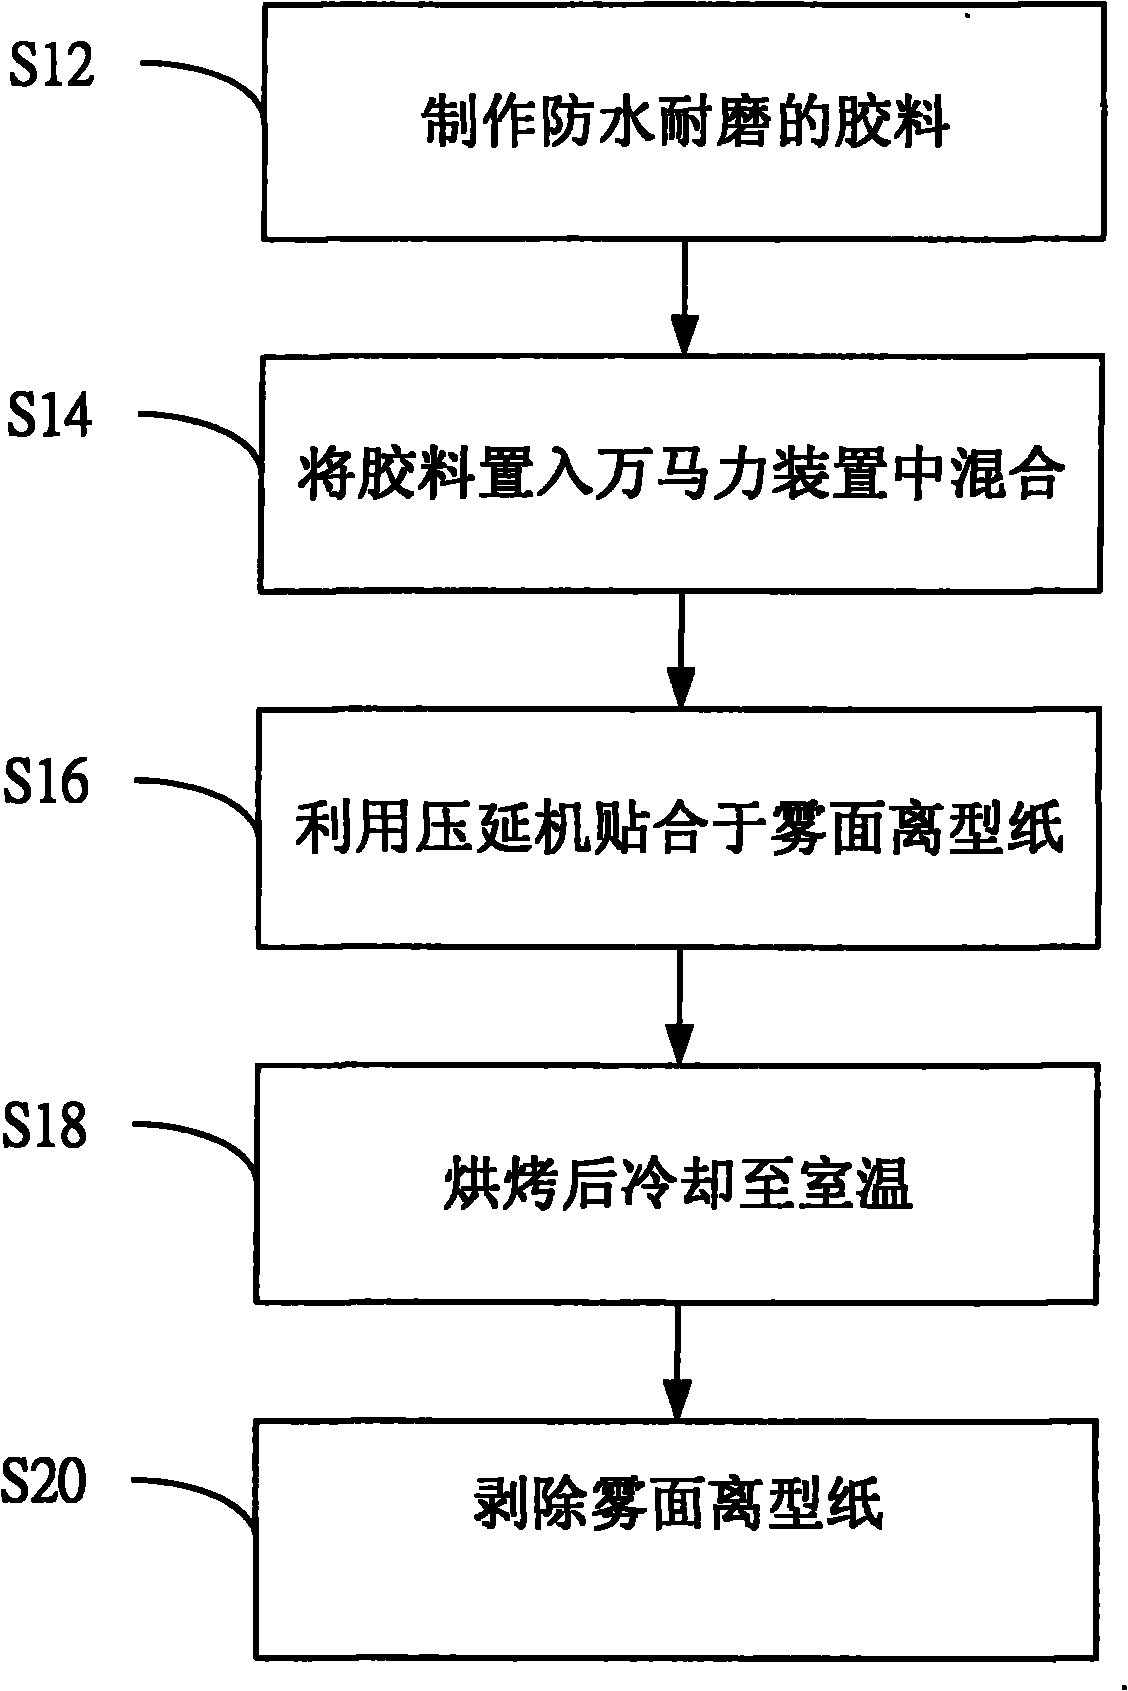 Production method of thermoplastic elastomer film